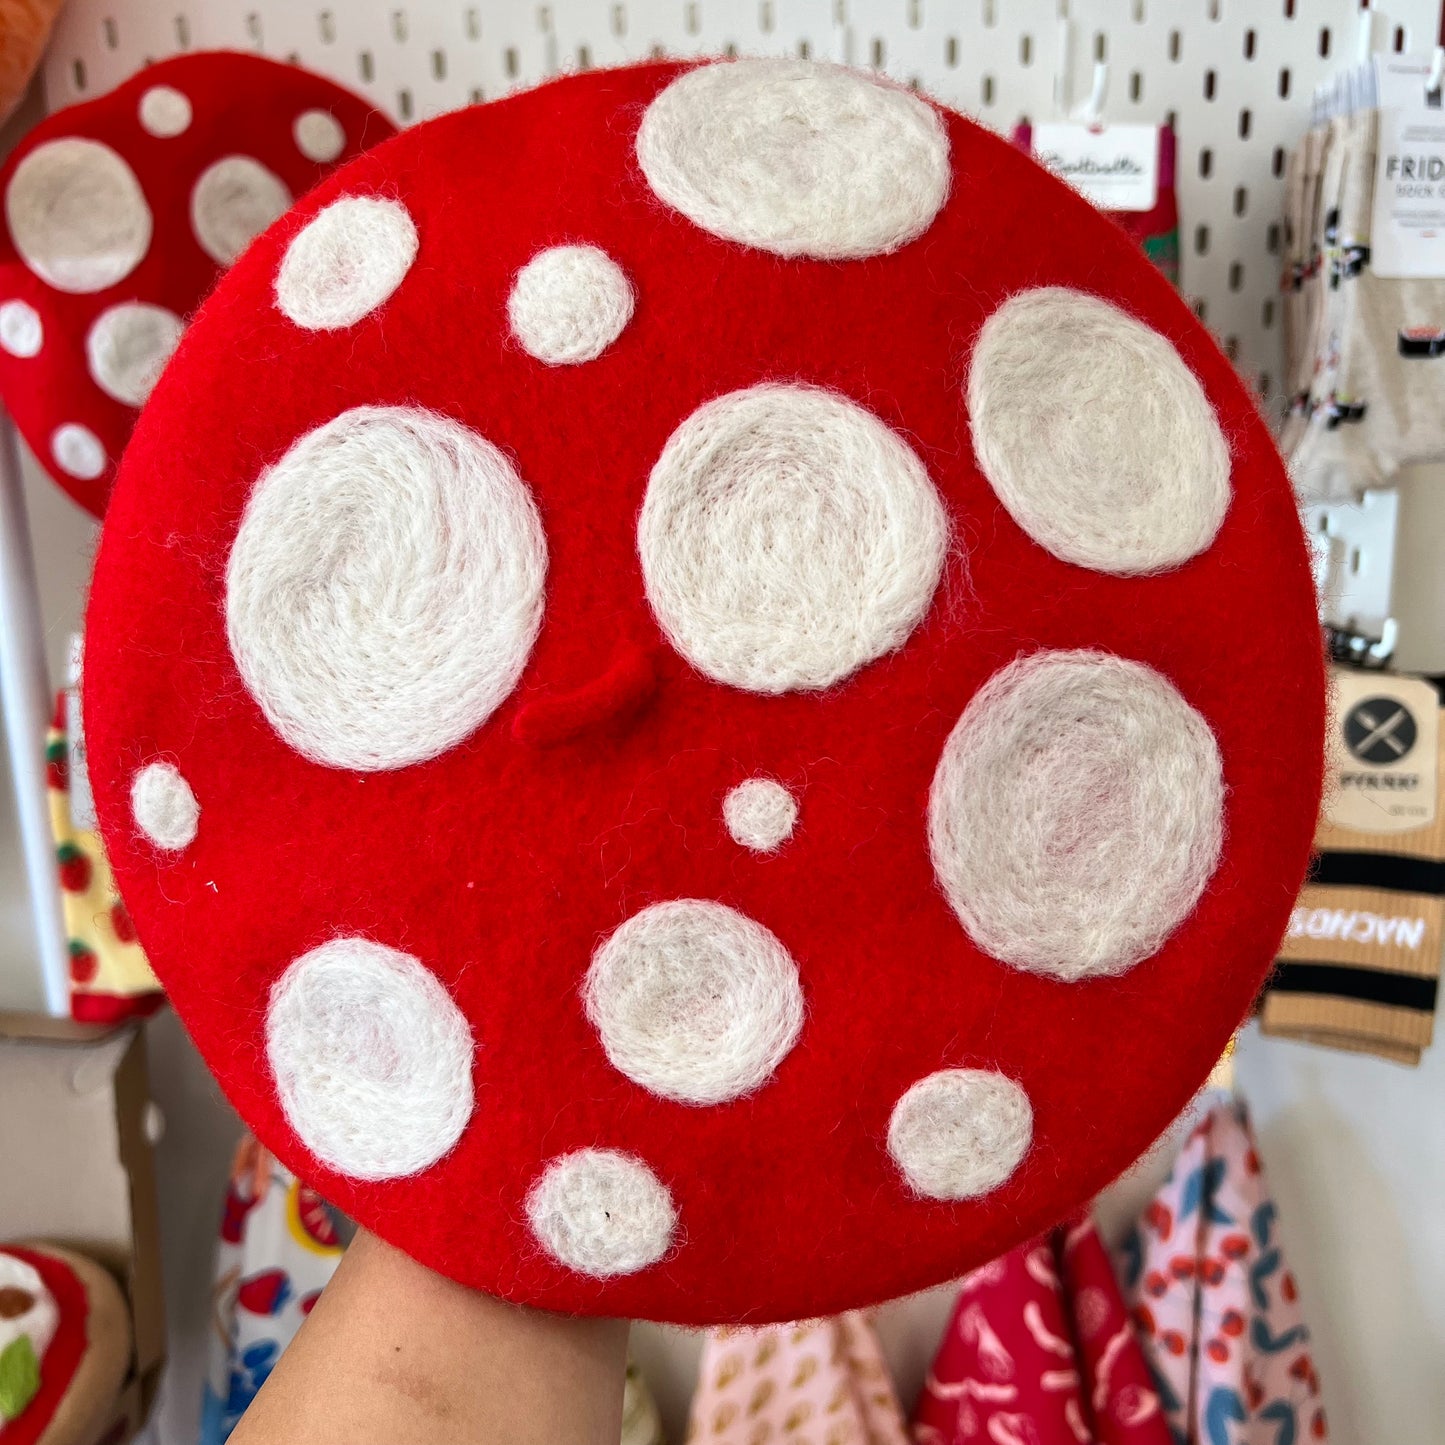 Wool-felted toadstool mushroom design on a red beret.